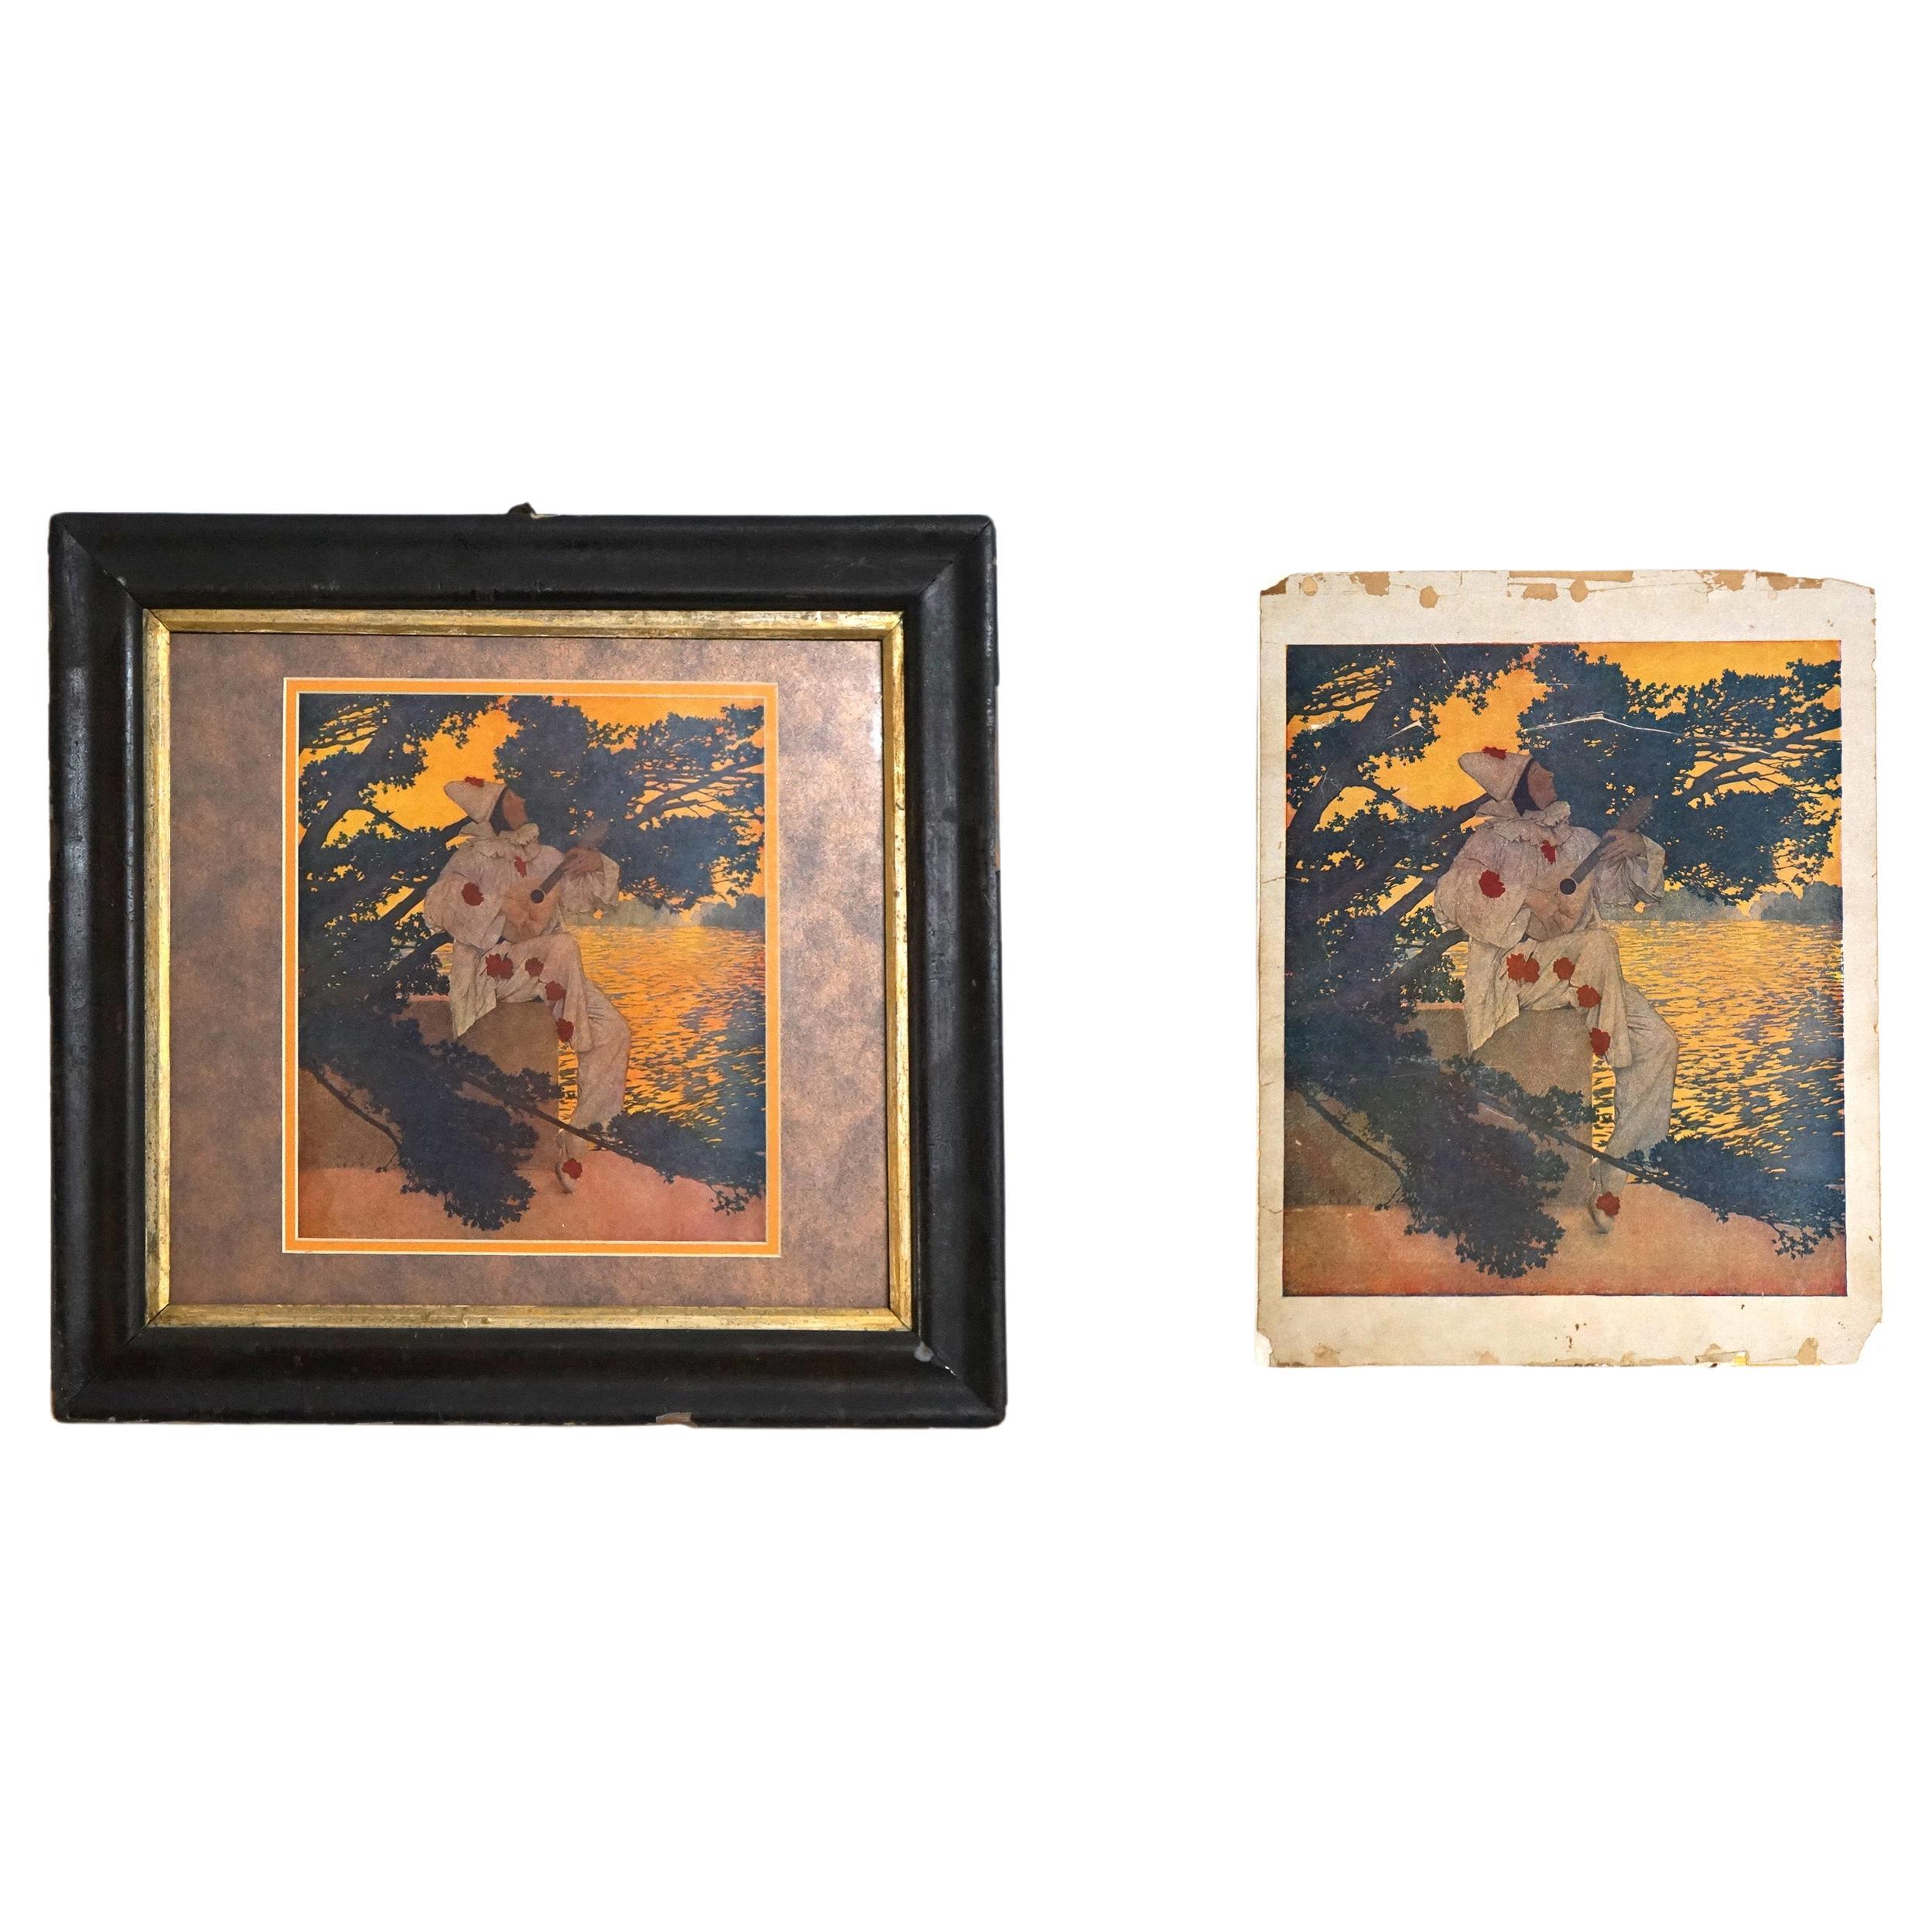 Two Art Deco Antique Maxfield Parrish Prints “Pierrot’s Serenade” C1920